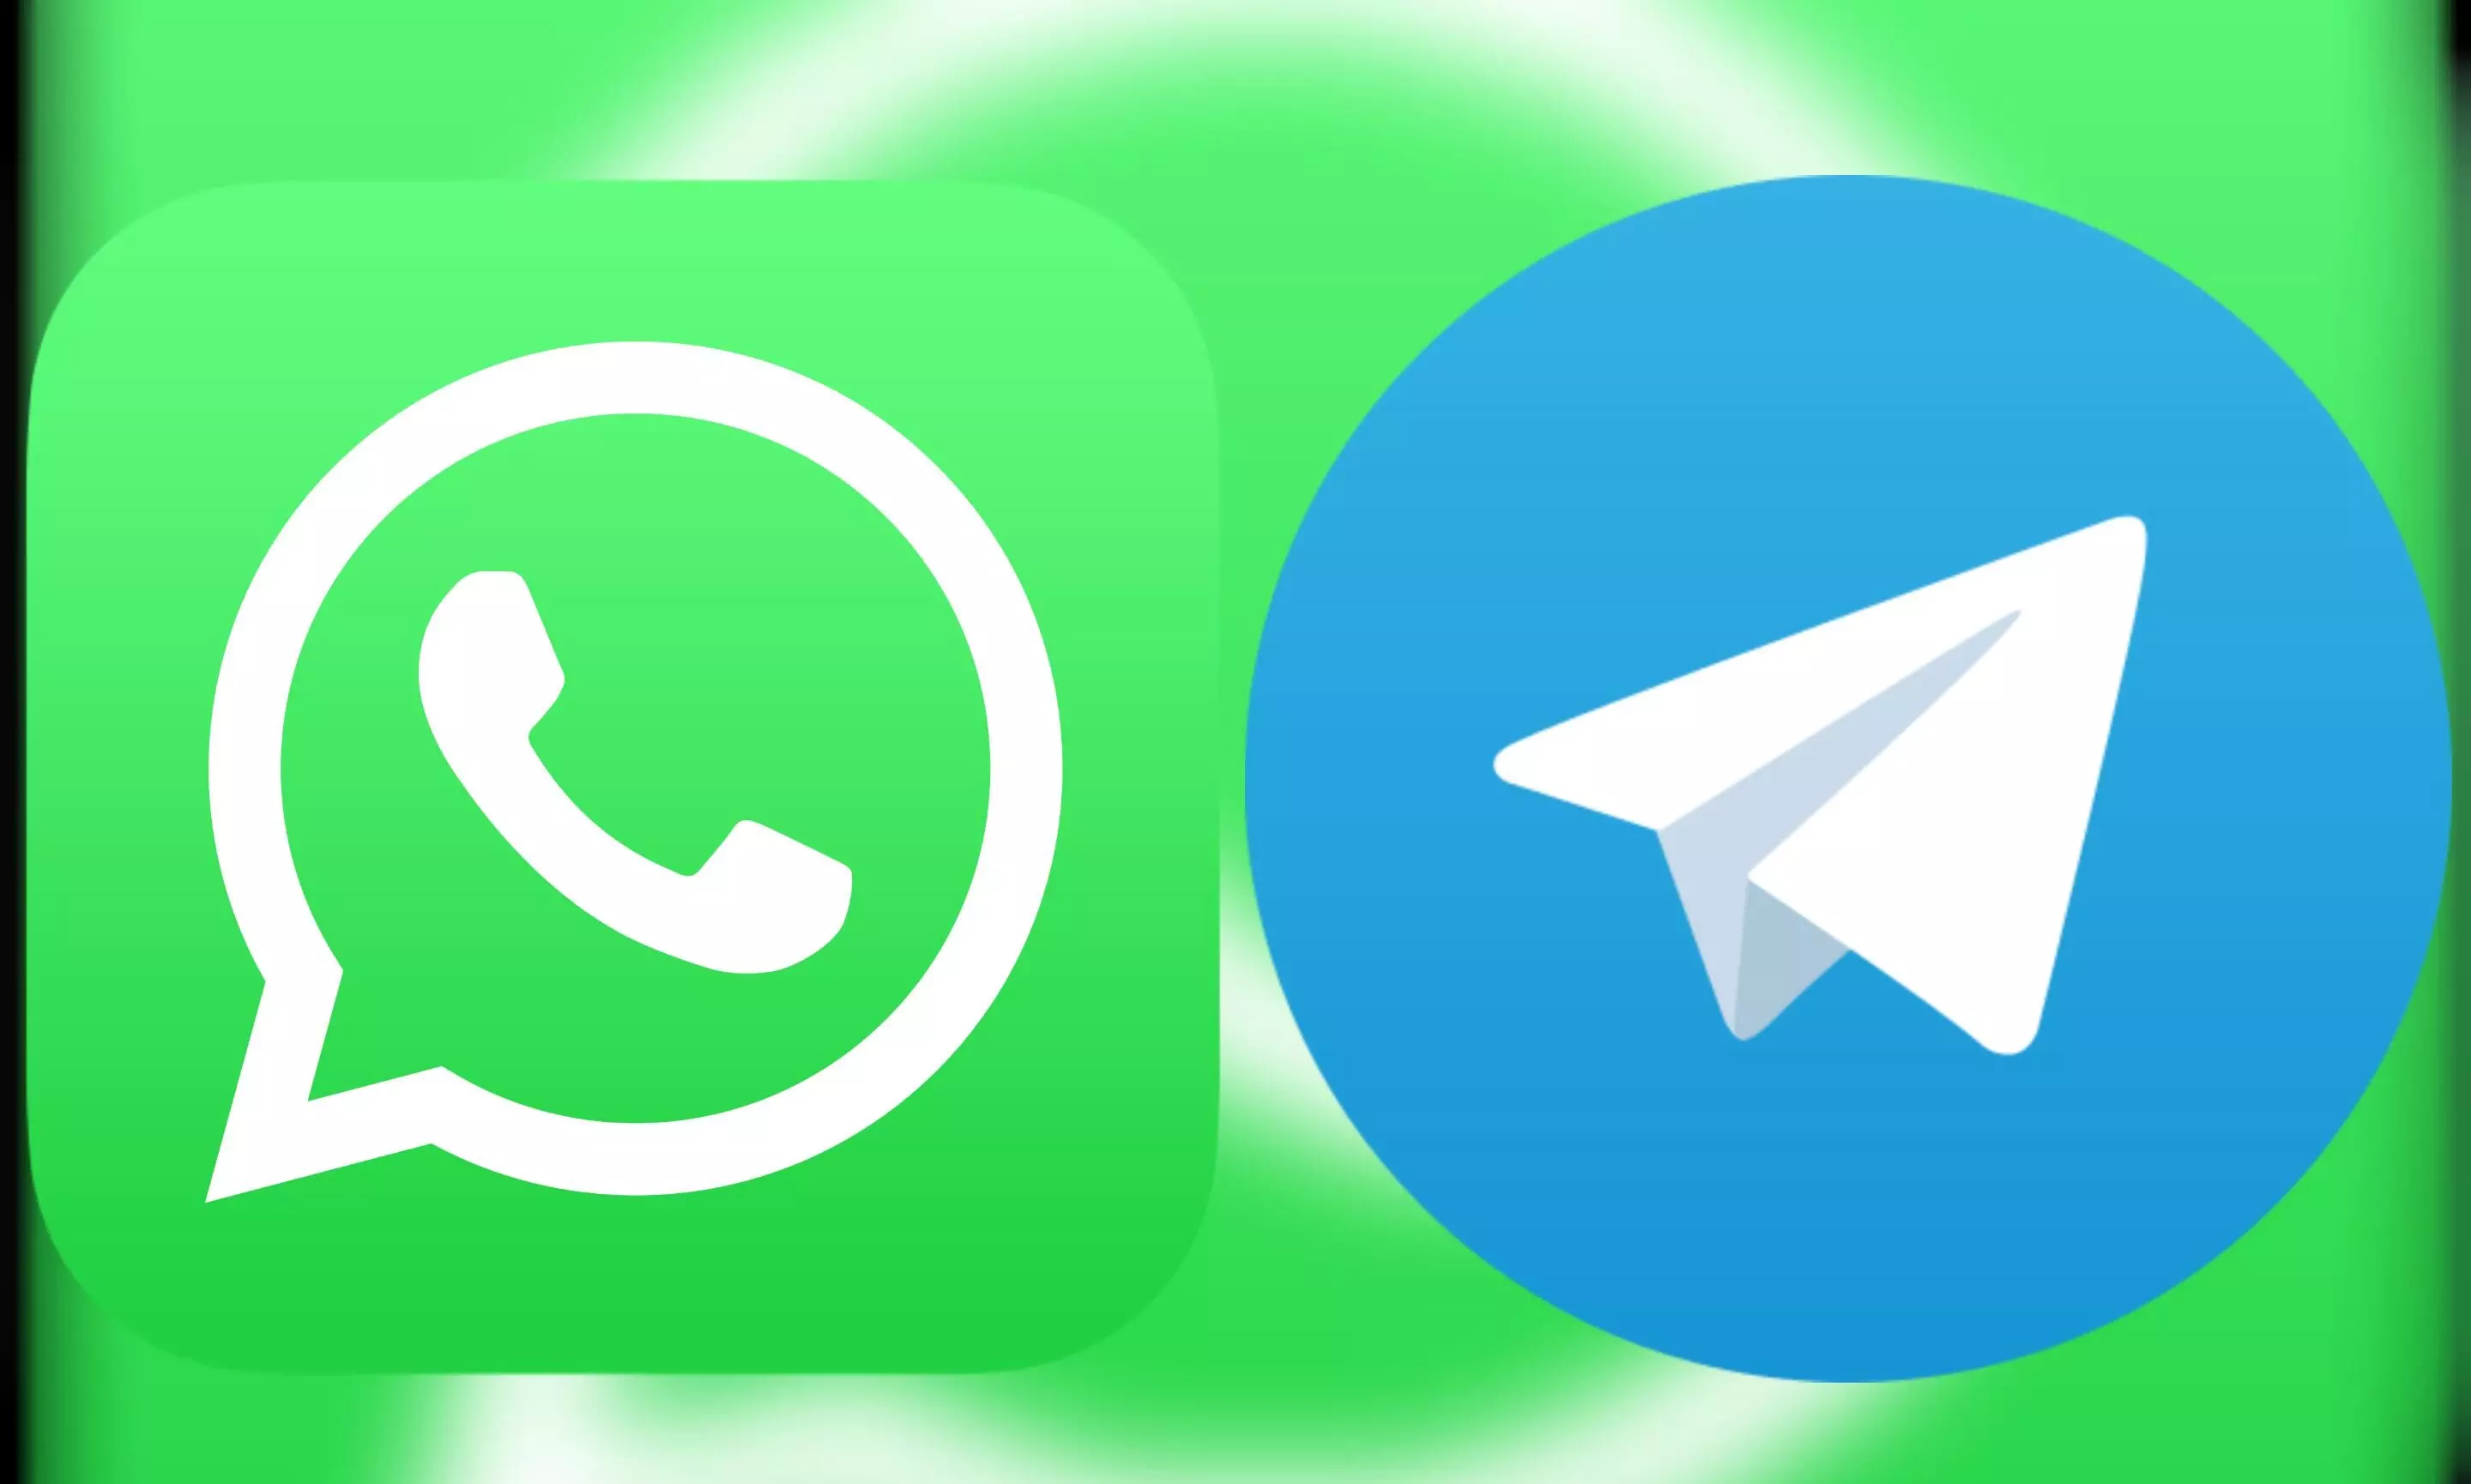 #Whatsappdown trending in Twitter; users migrate in hordes from WhatsApp to Telegram